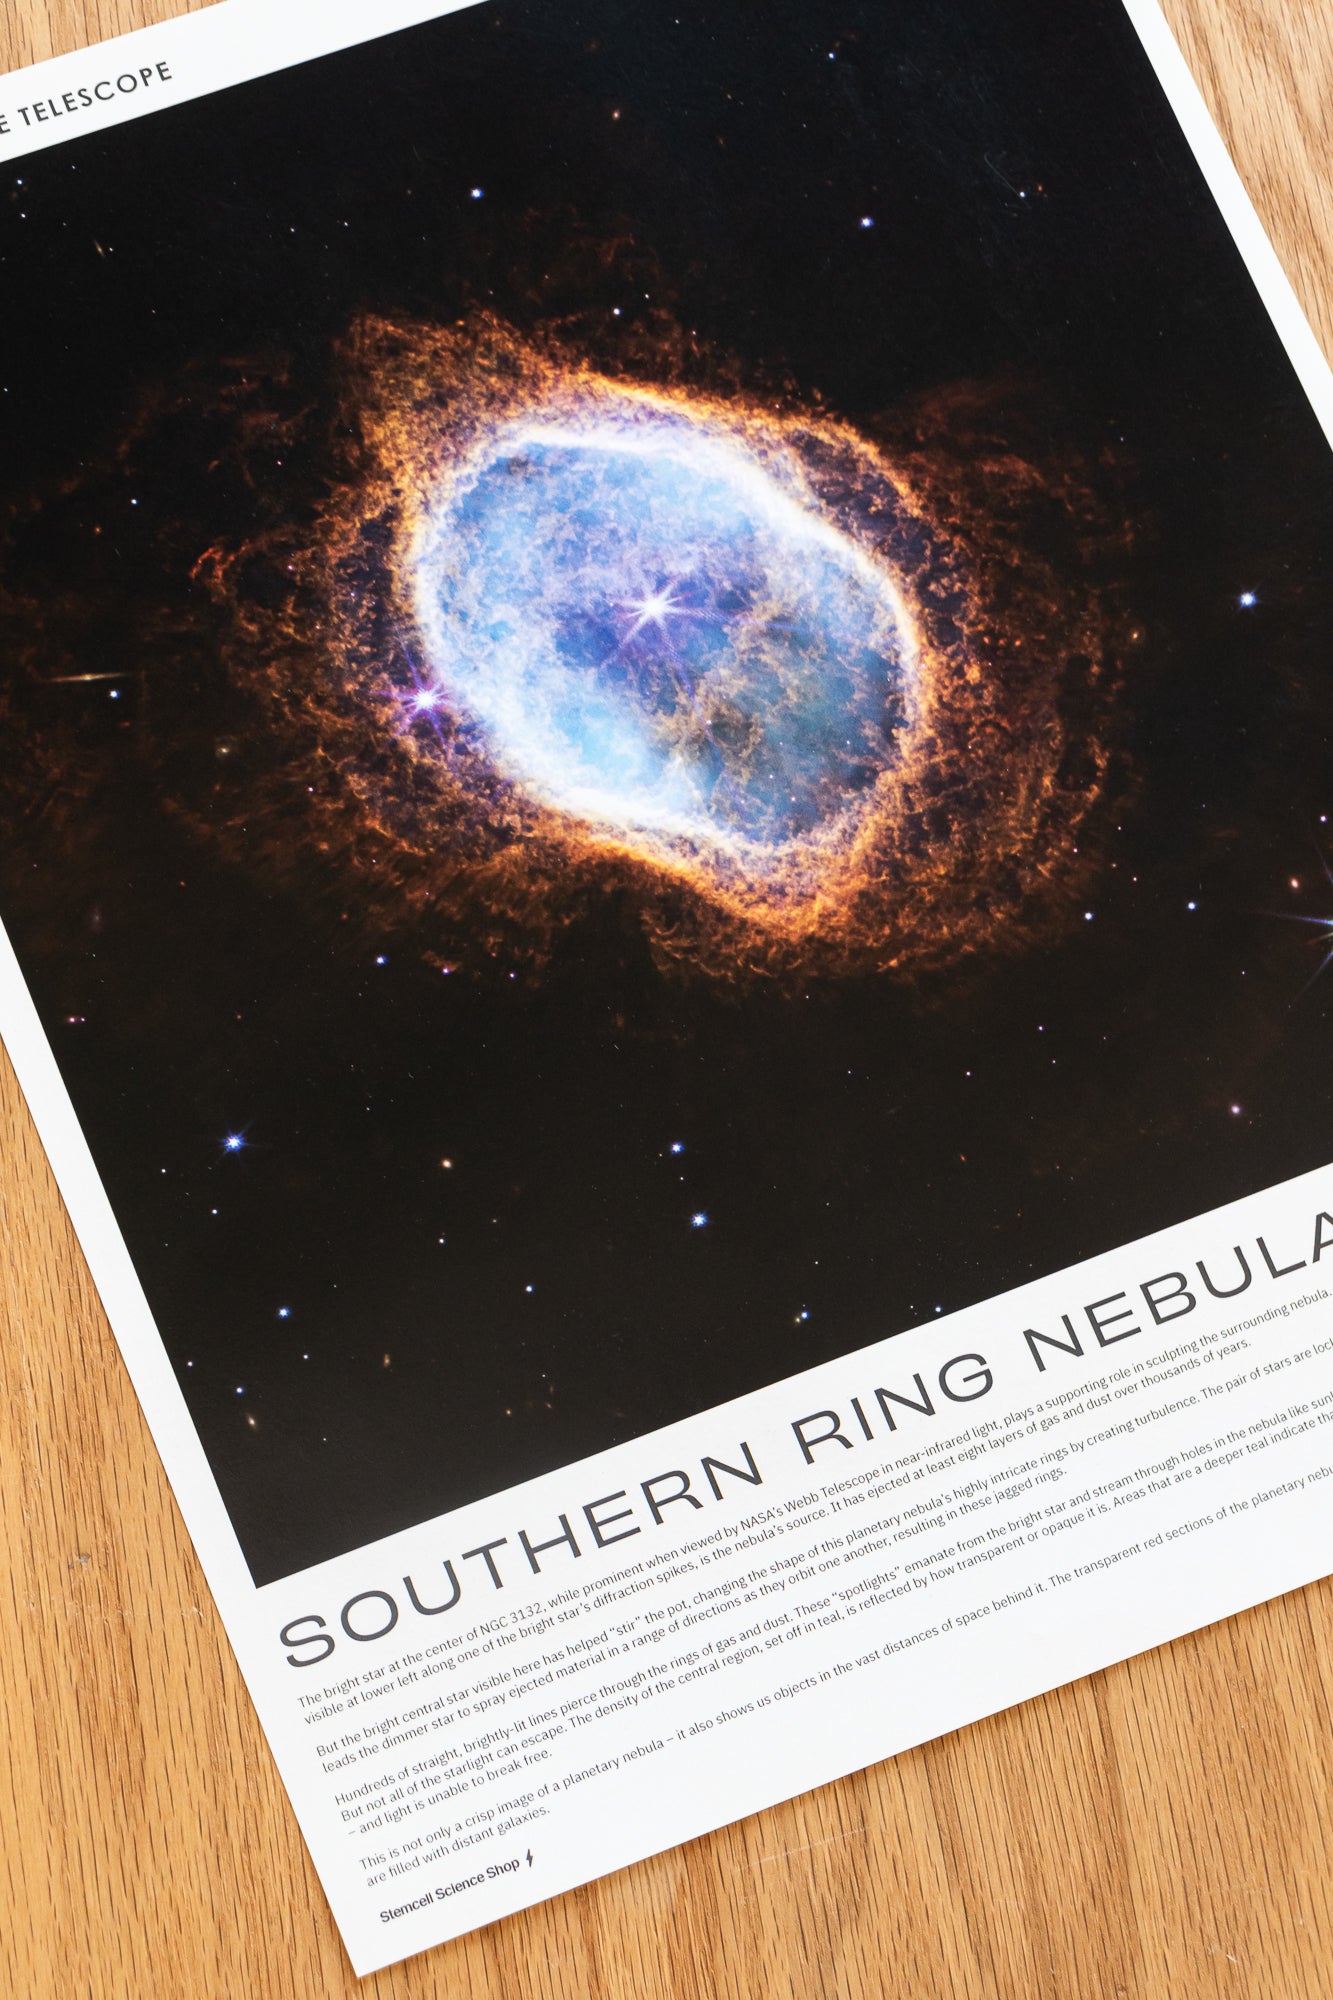 JWST Historic Poster #2 - Southern Ring Nebula